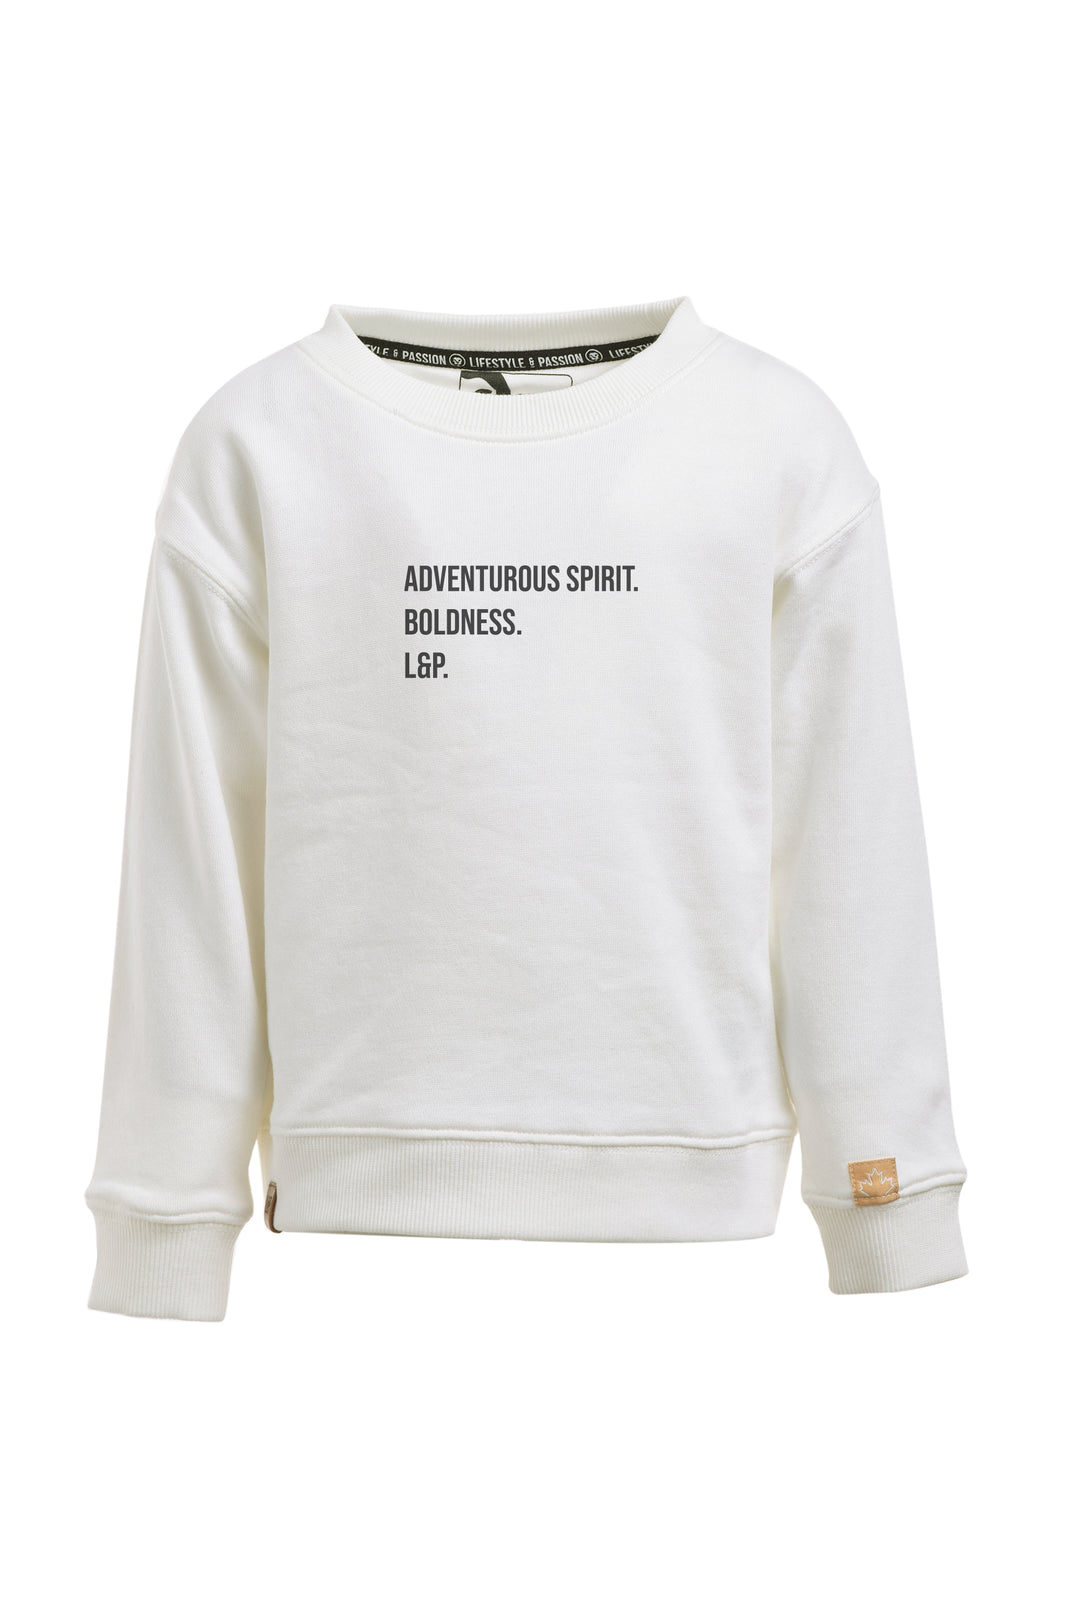 French Cotton Crewneck Sweater [Boldness] [Junior]